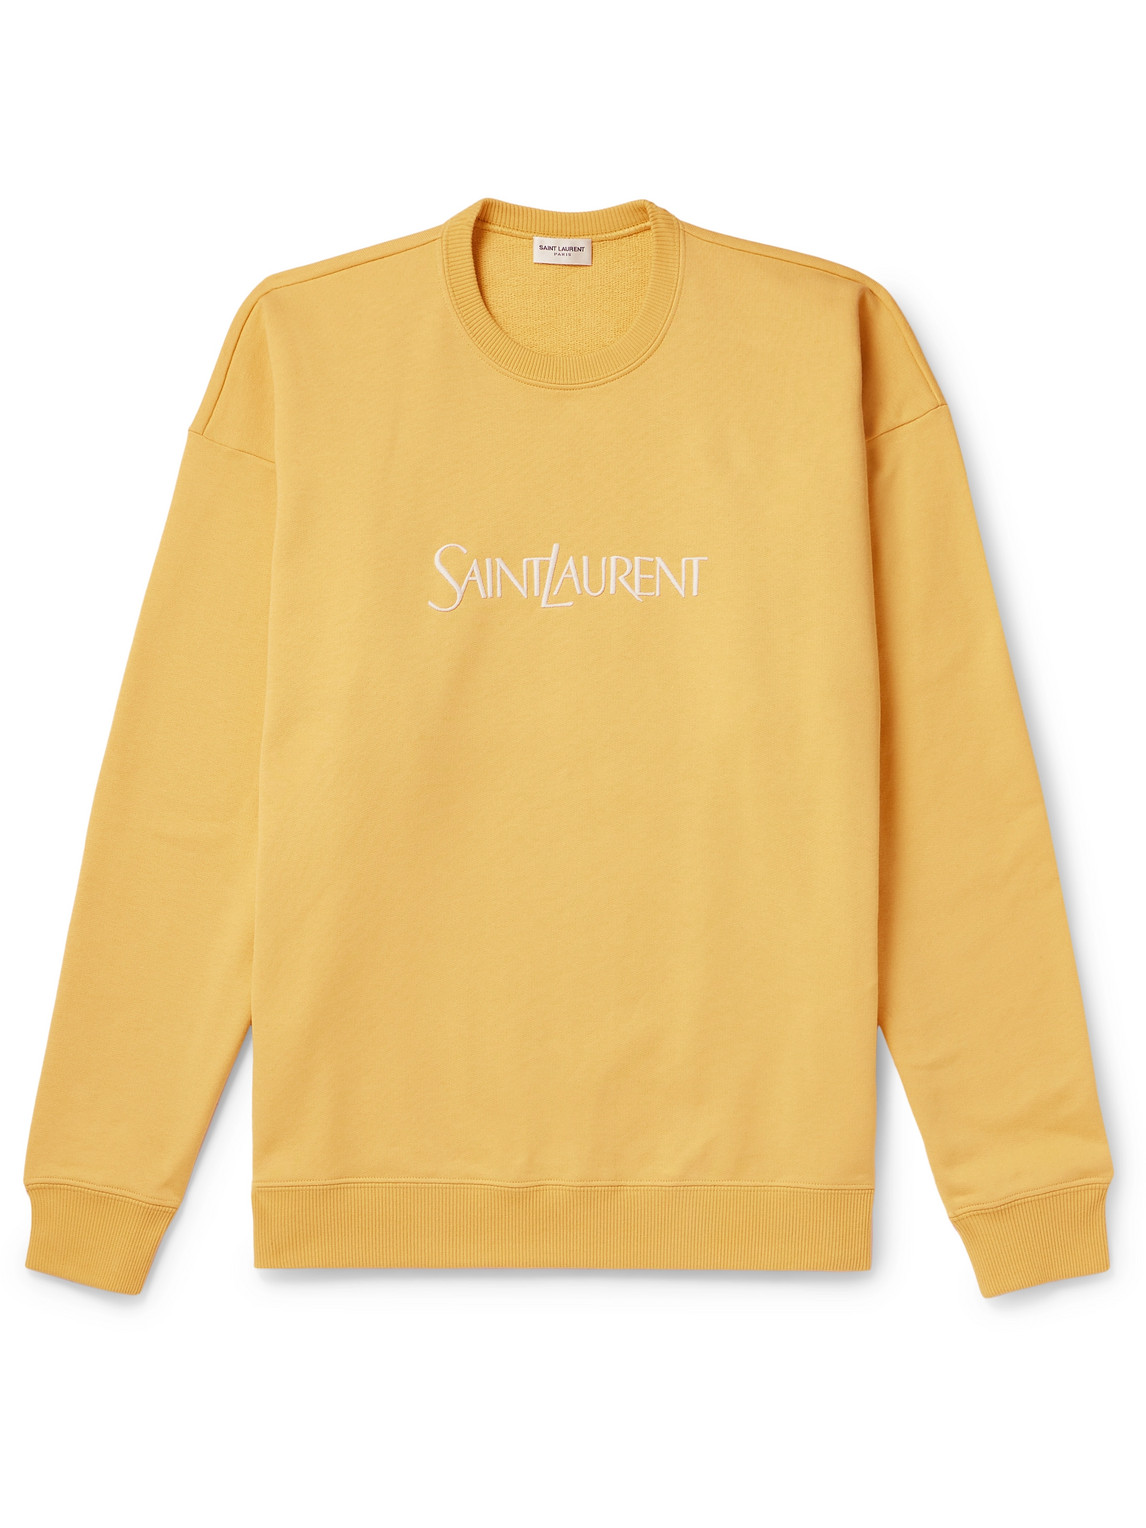 SAINT LAURENT - Logo-Embroidered Cotton-Jersey Sweatshirt - Men - Yellow - L von SAINT LAURENT